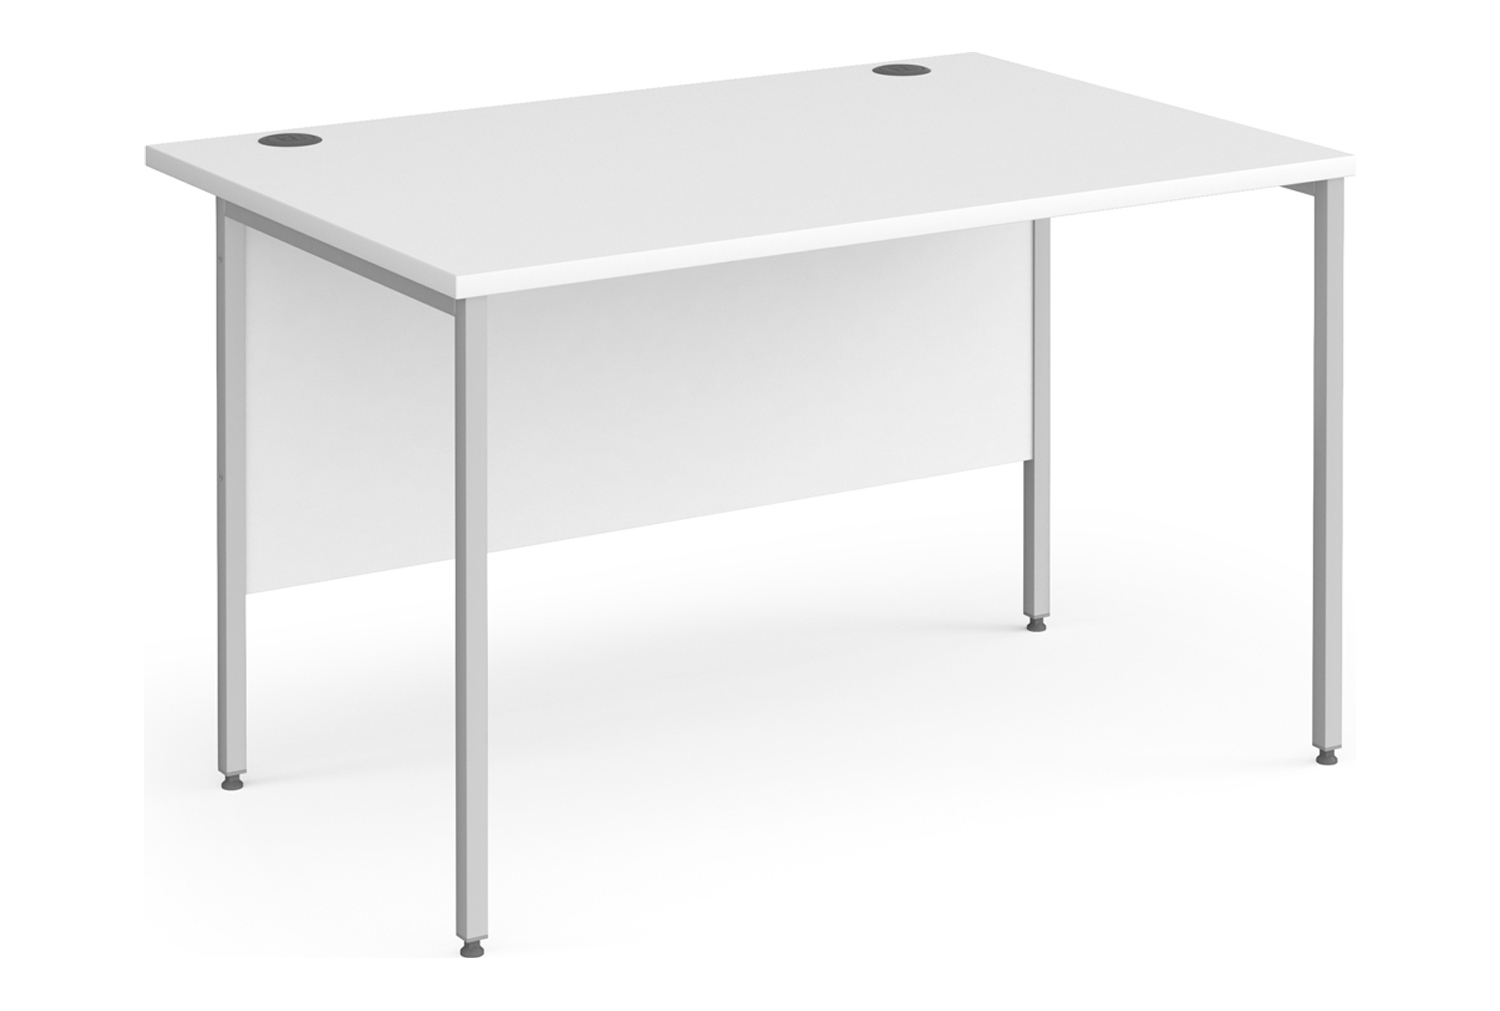 Value Line Classic+ Rectangular H-Leg Office Desk (Silver Leg), 120wx80dx73h (cm), White